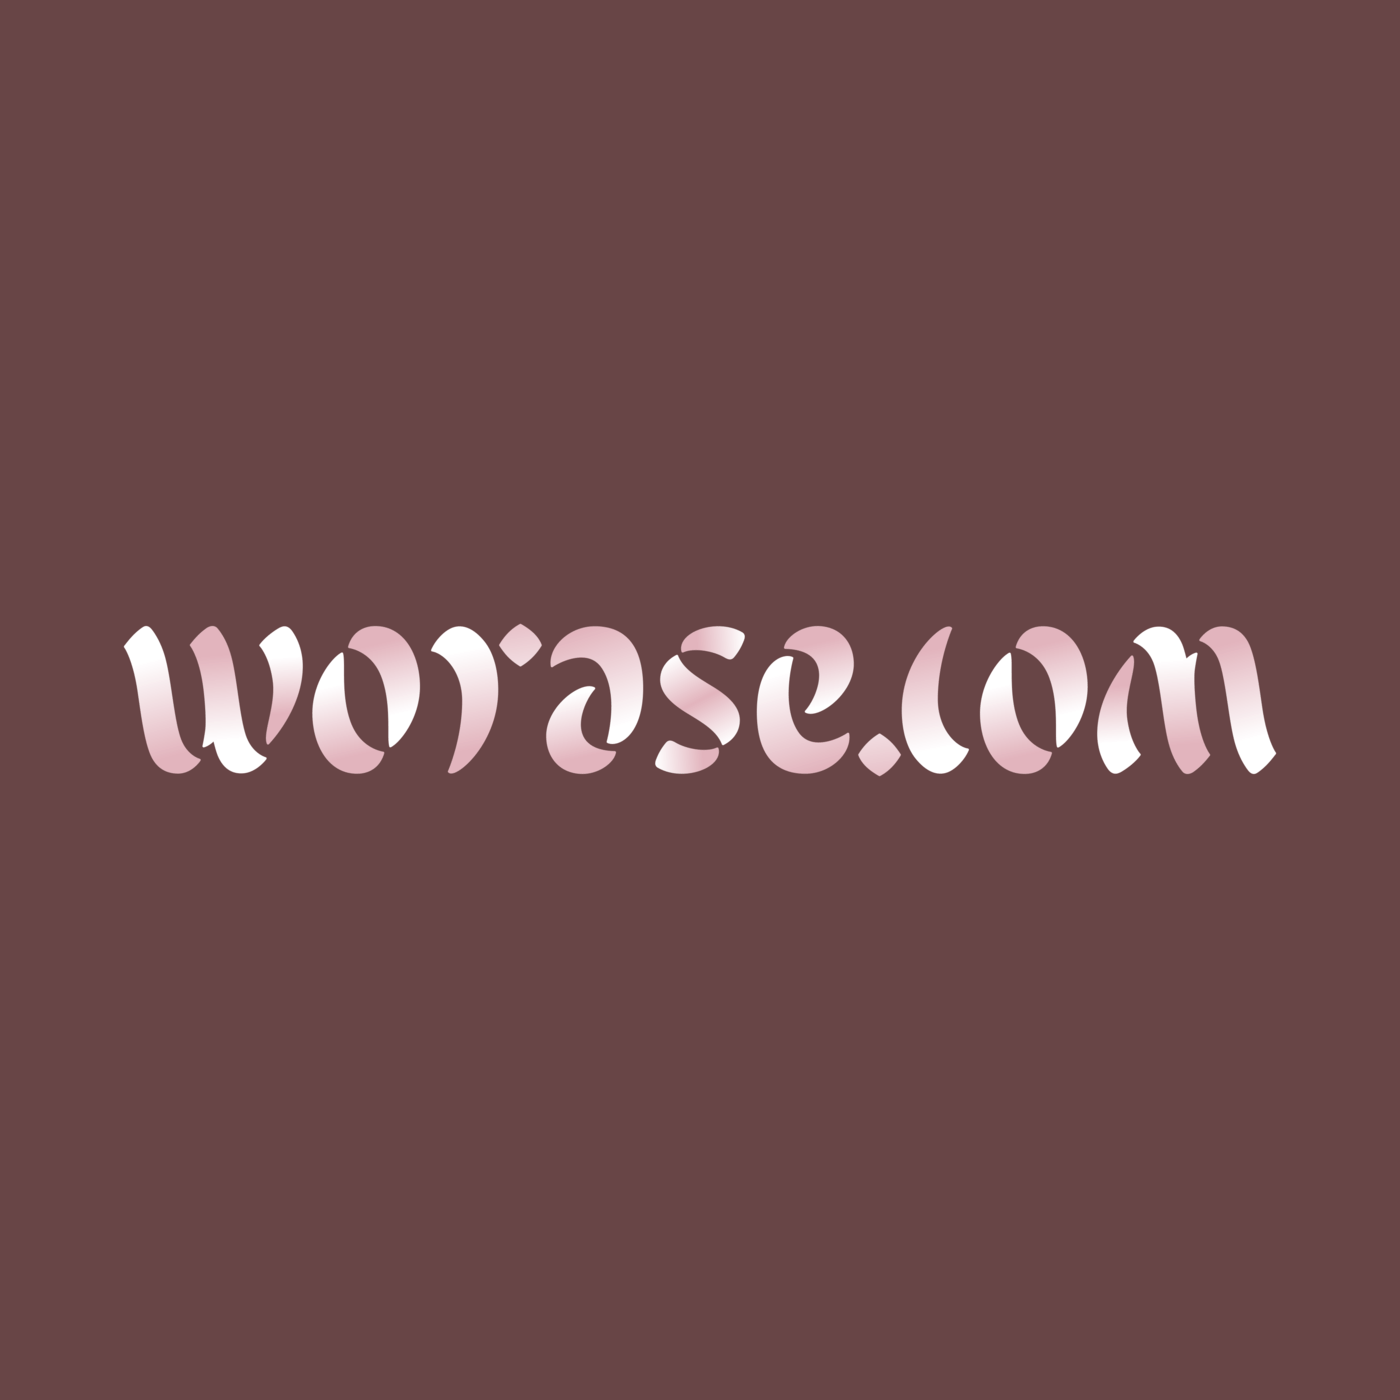 ambigram worase.com pink red